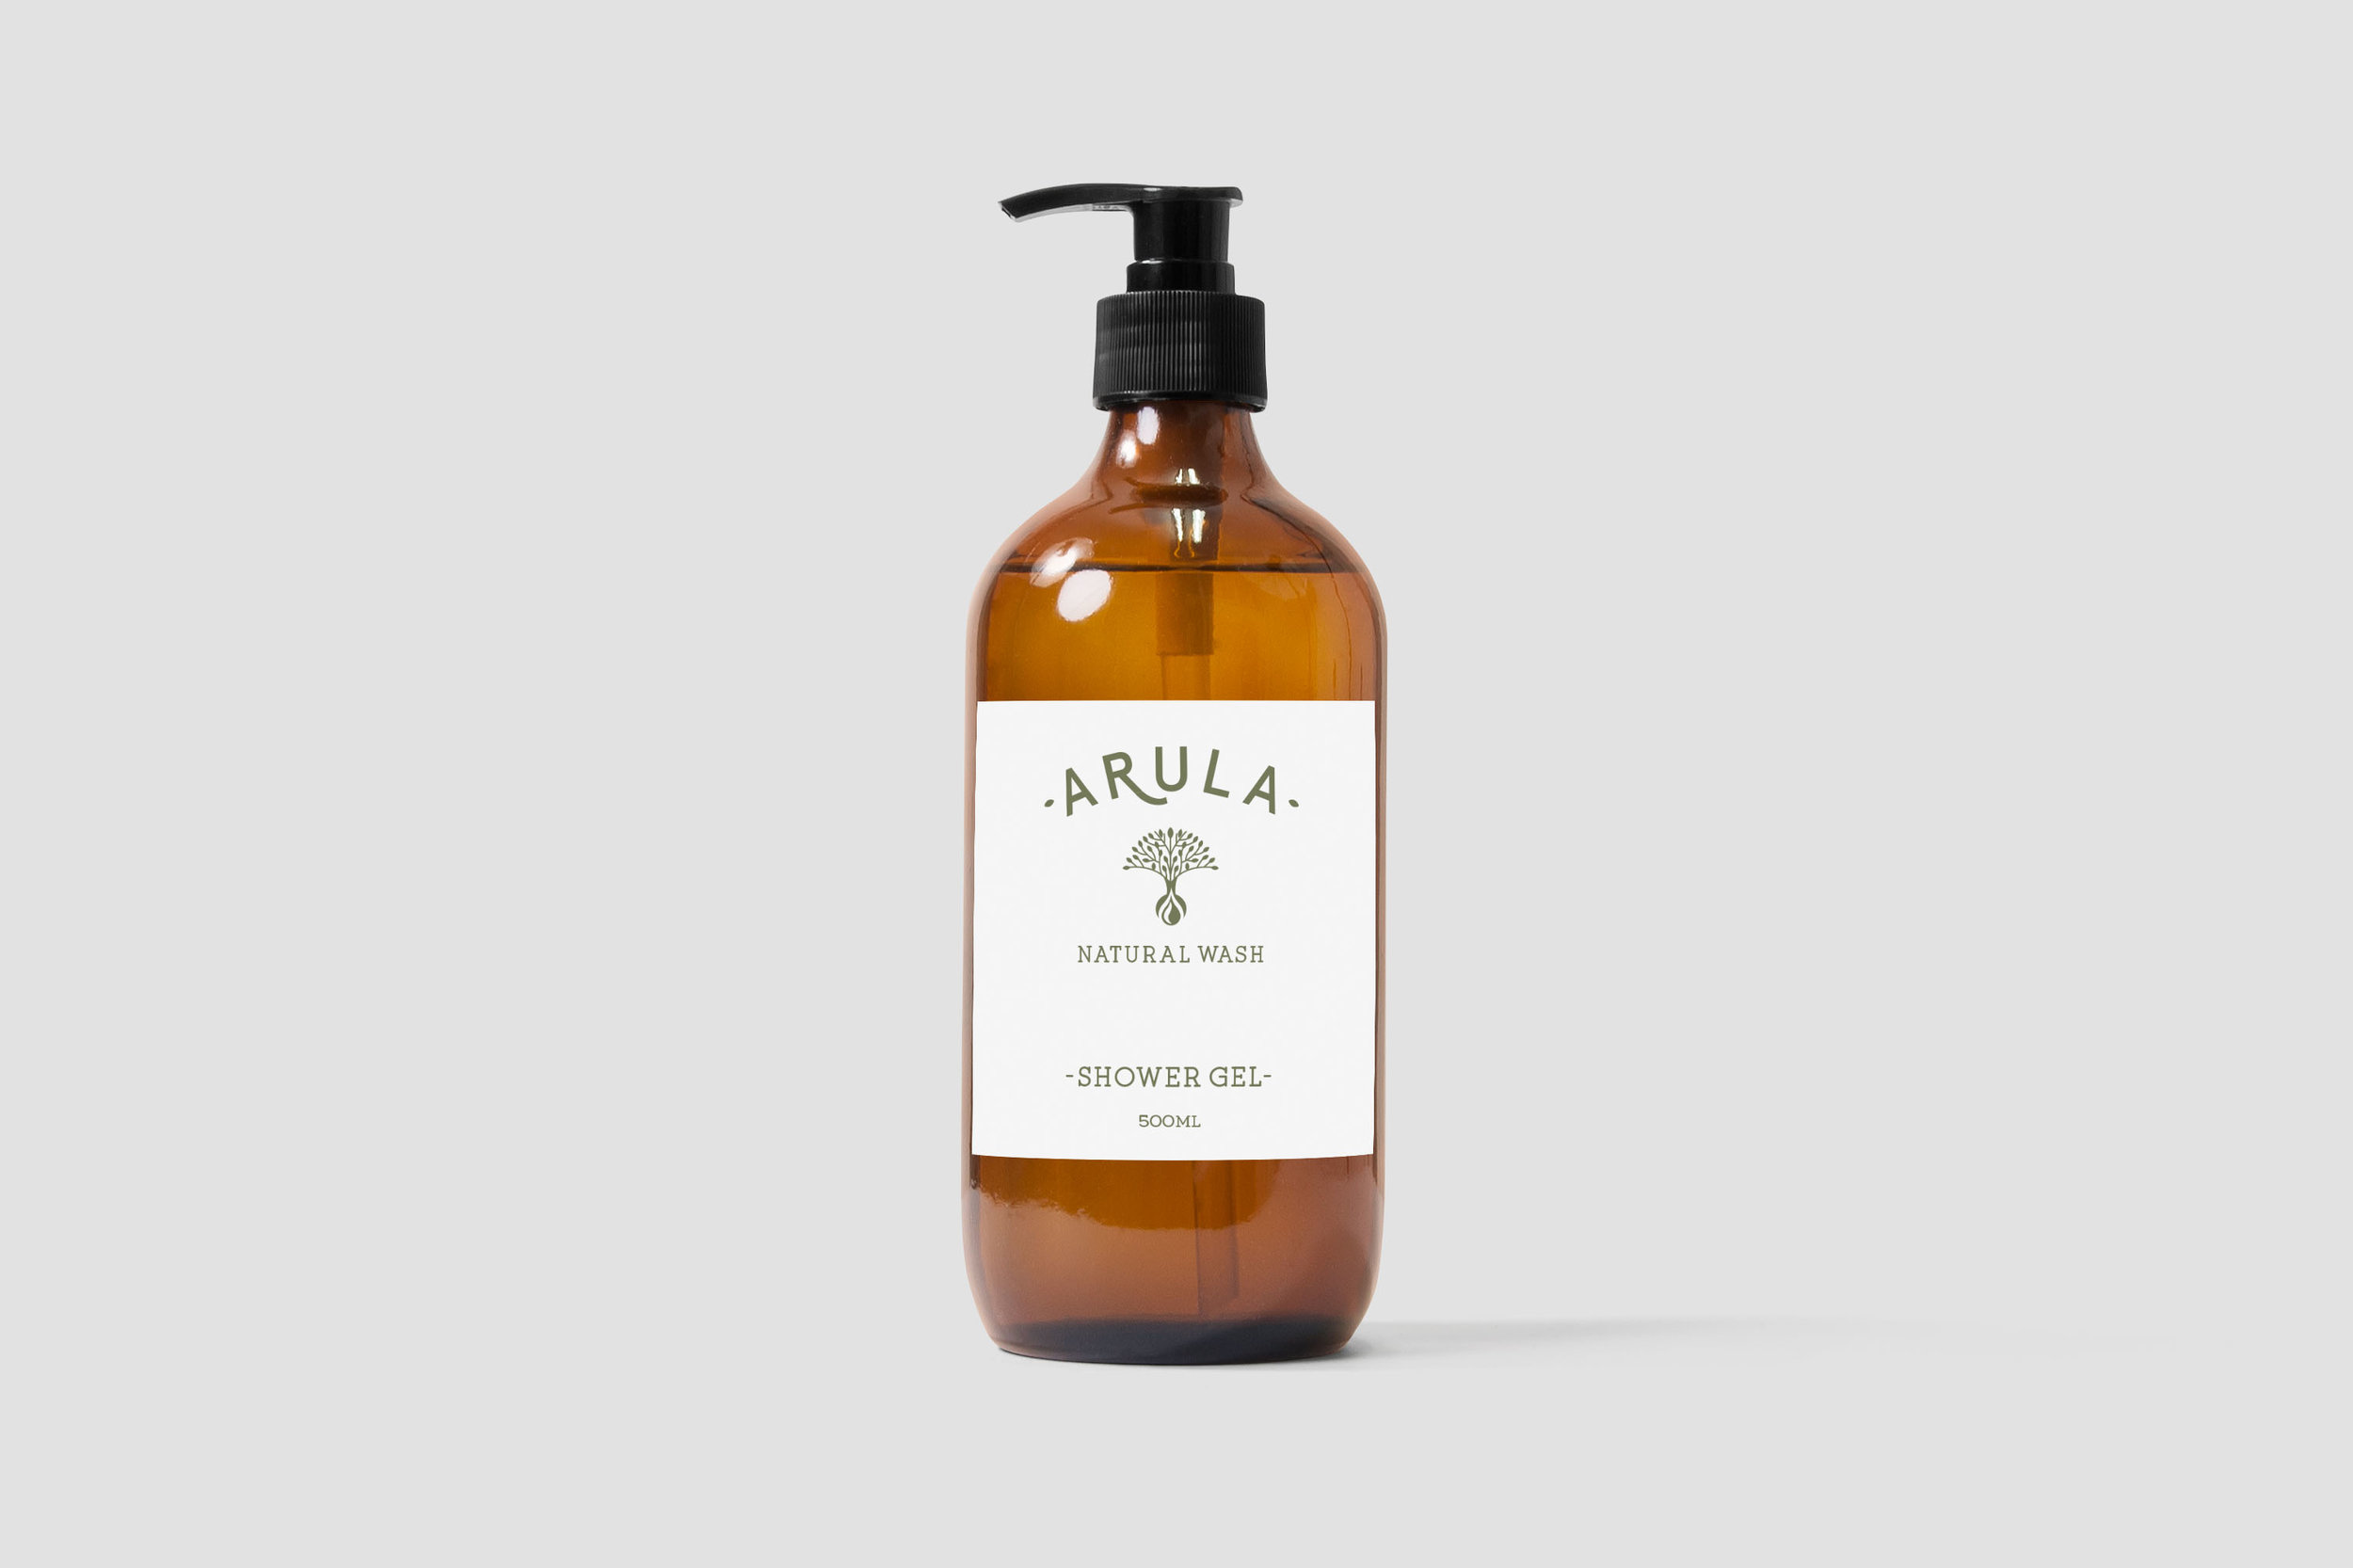 Packaging Design Company UK A Arula showel gel soap bottle in grey background